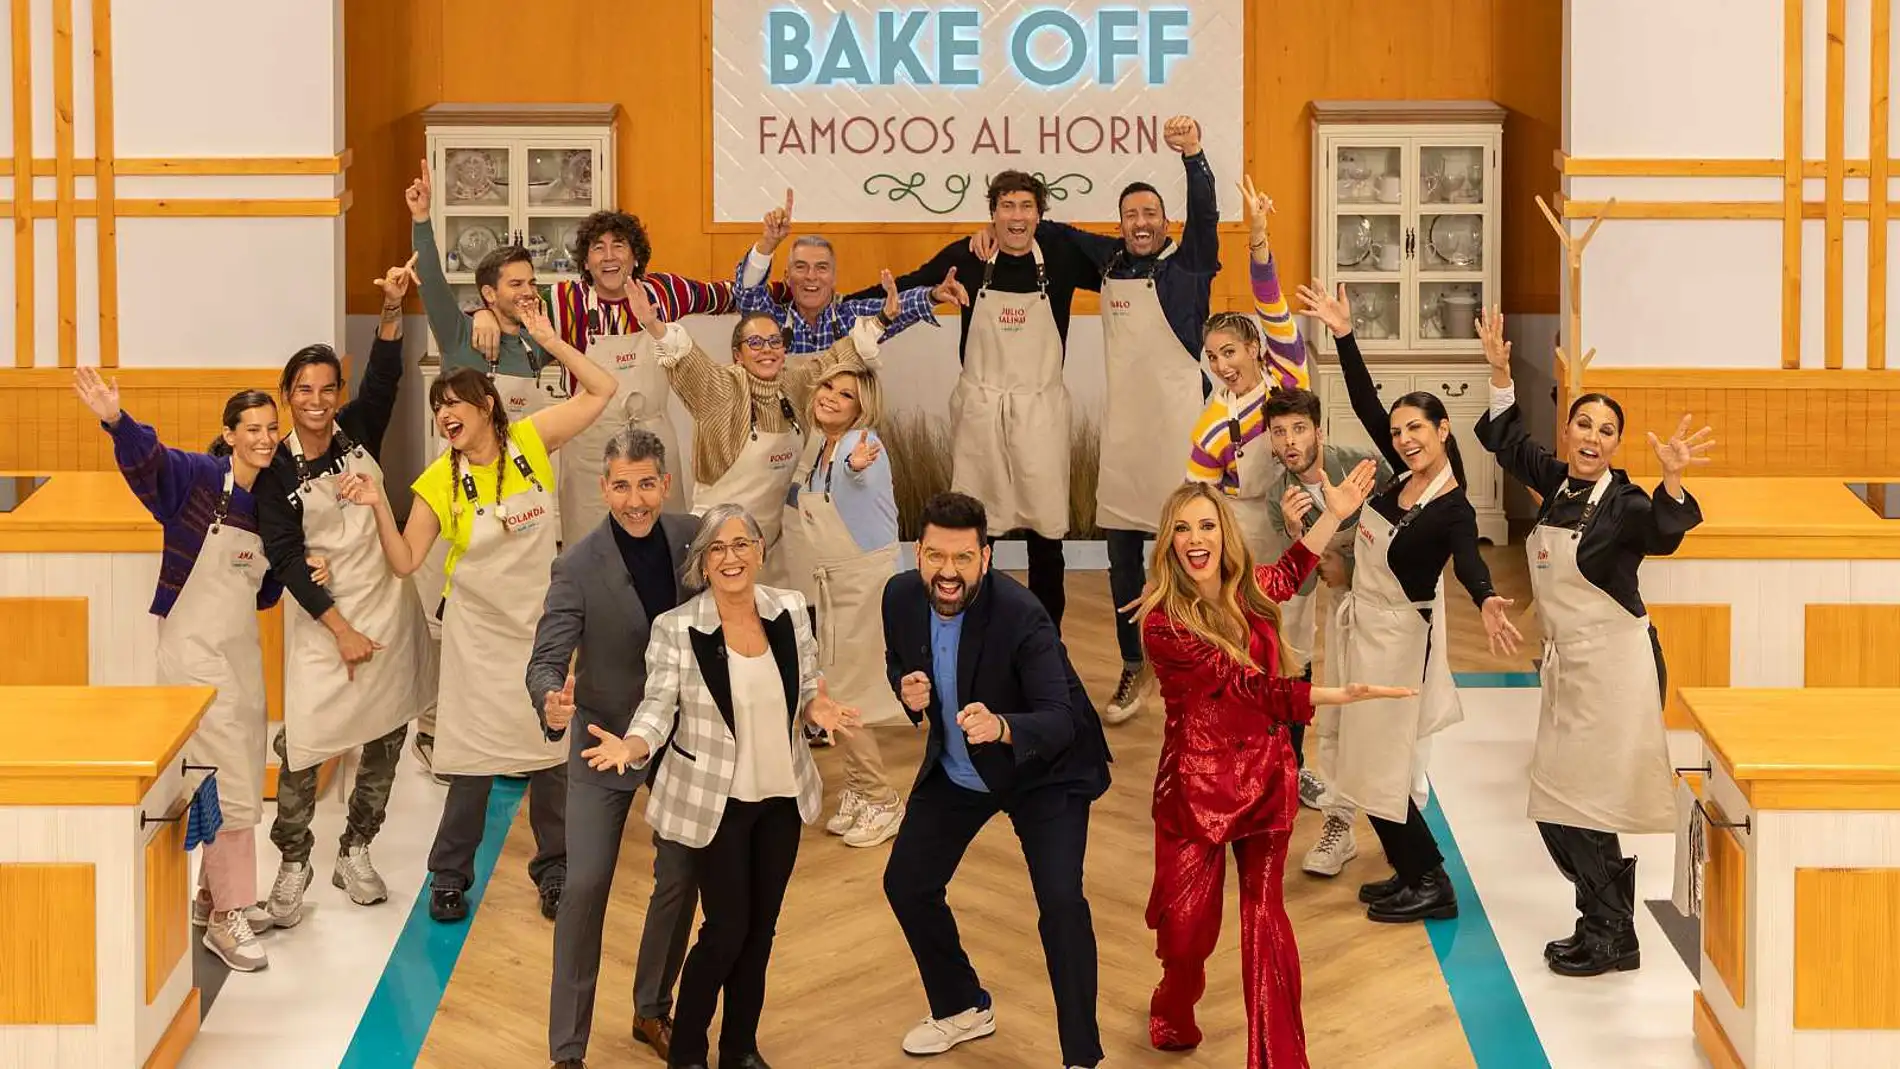 El elenco de 'Bake Off: famosos al horno'